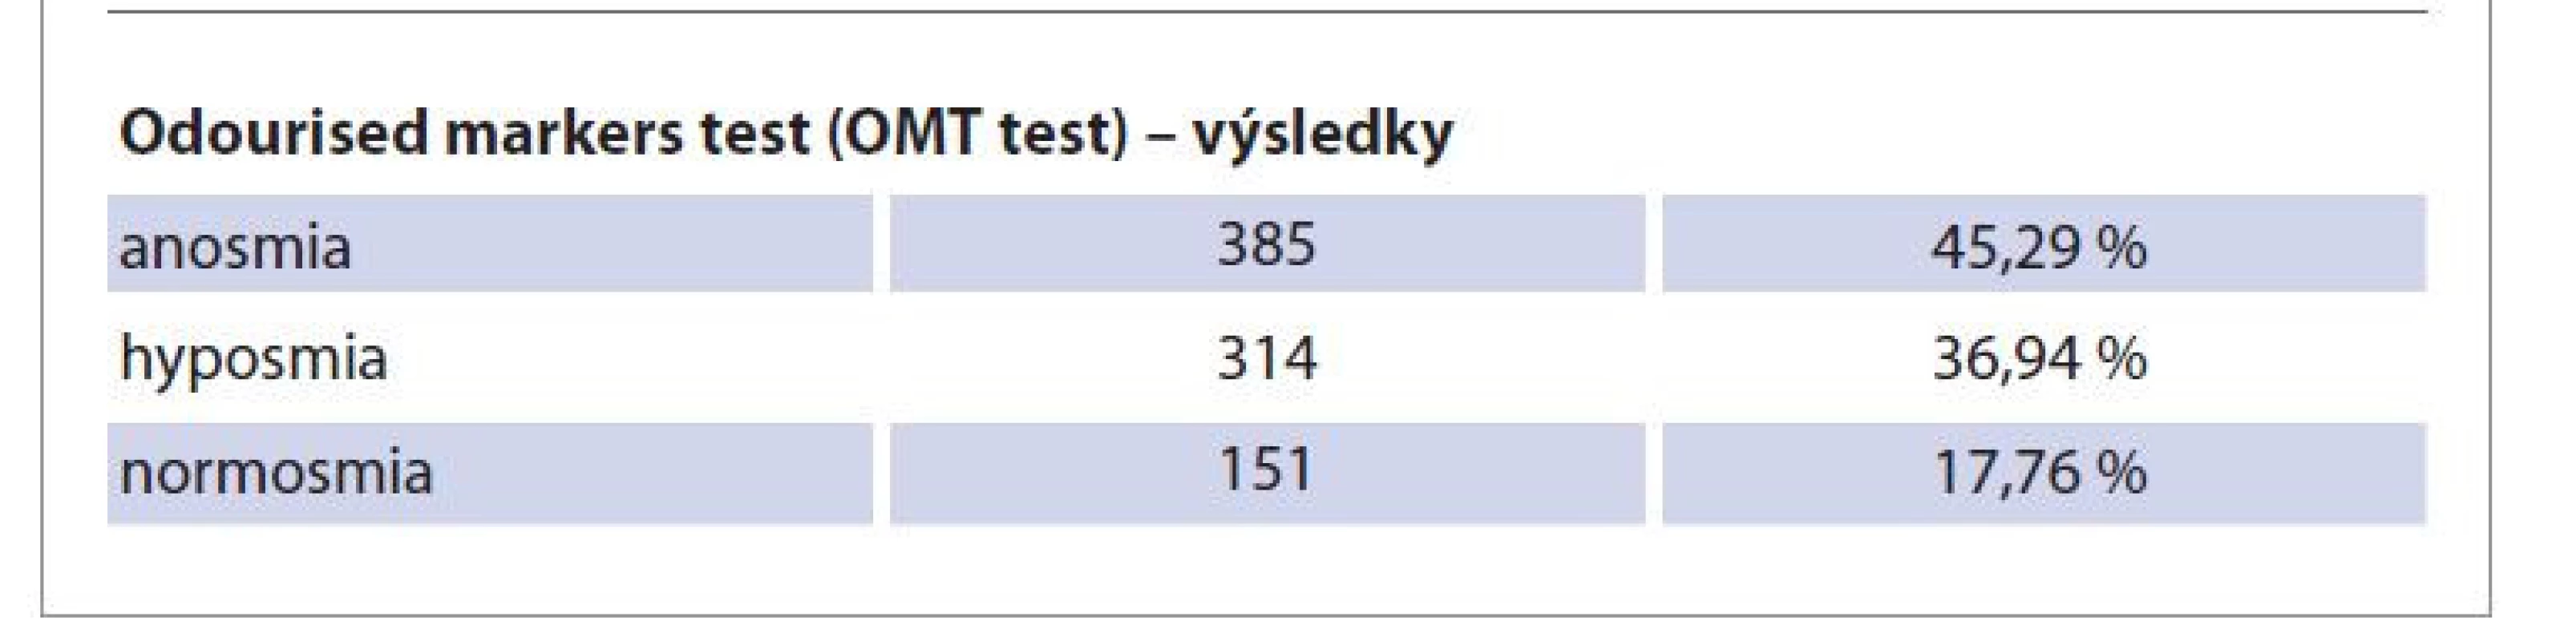 Počet otestovaných pacientov s poruchou čuchu.<br>
Tab. 2. Number of tested patients with olfactory disorders.